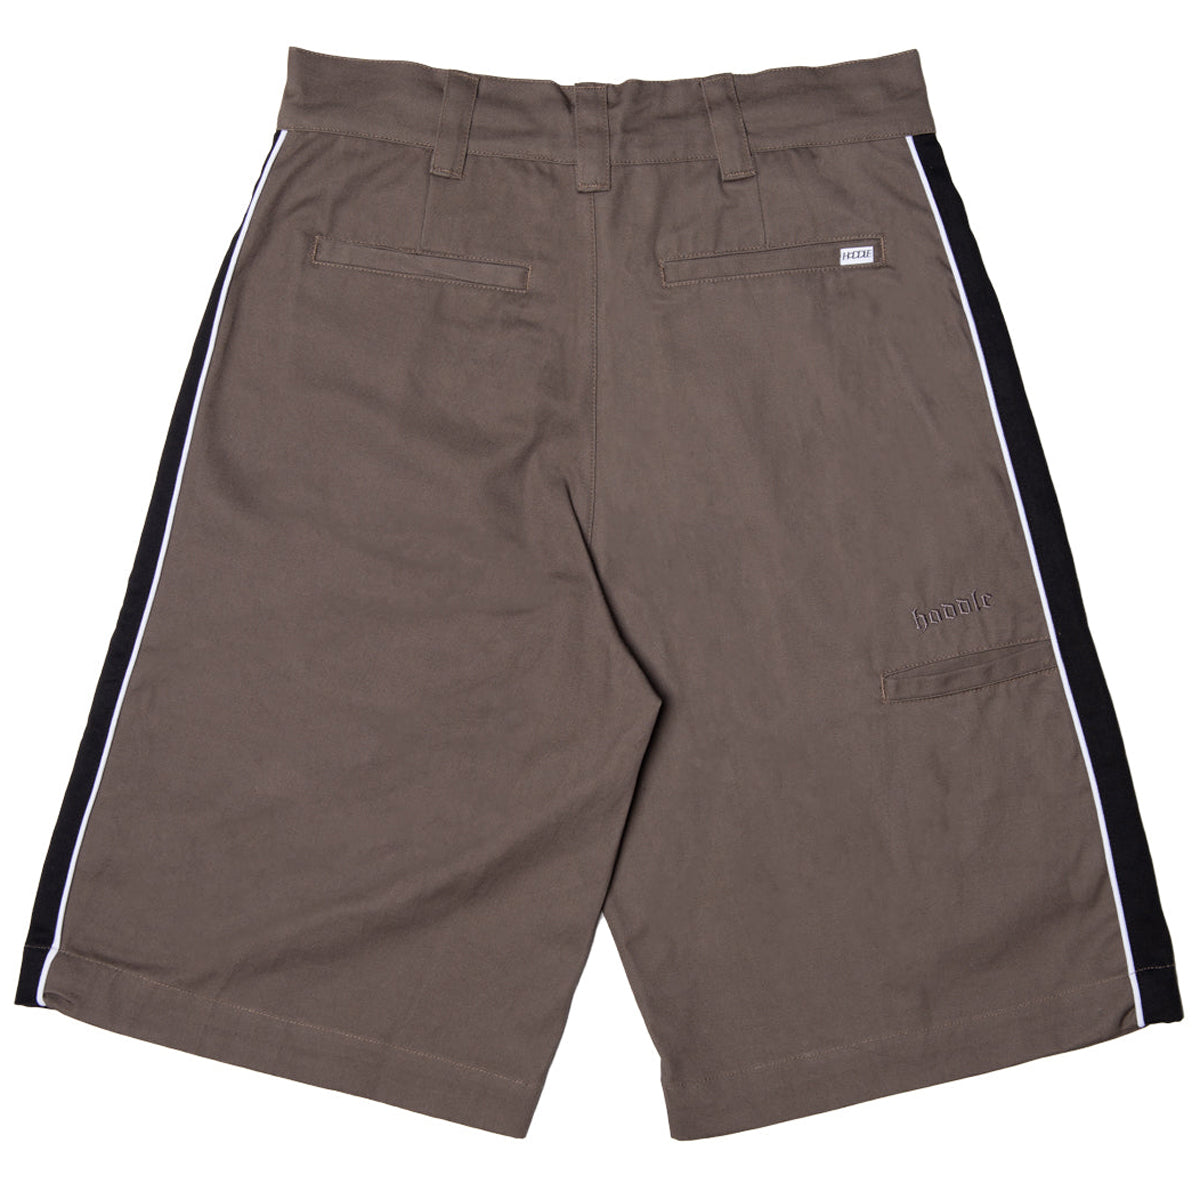 Hoddle Bermuda Shorts - Gunmetal Grey/Black image 2